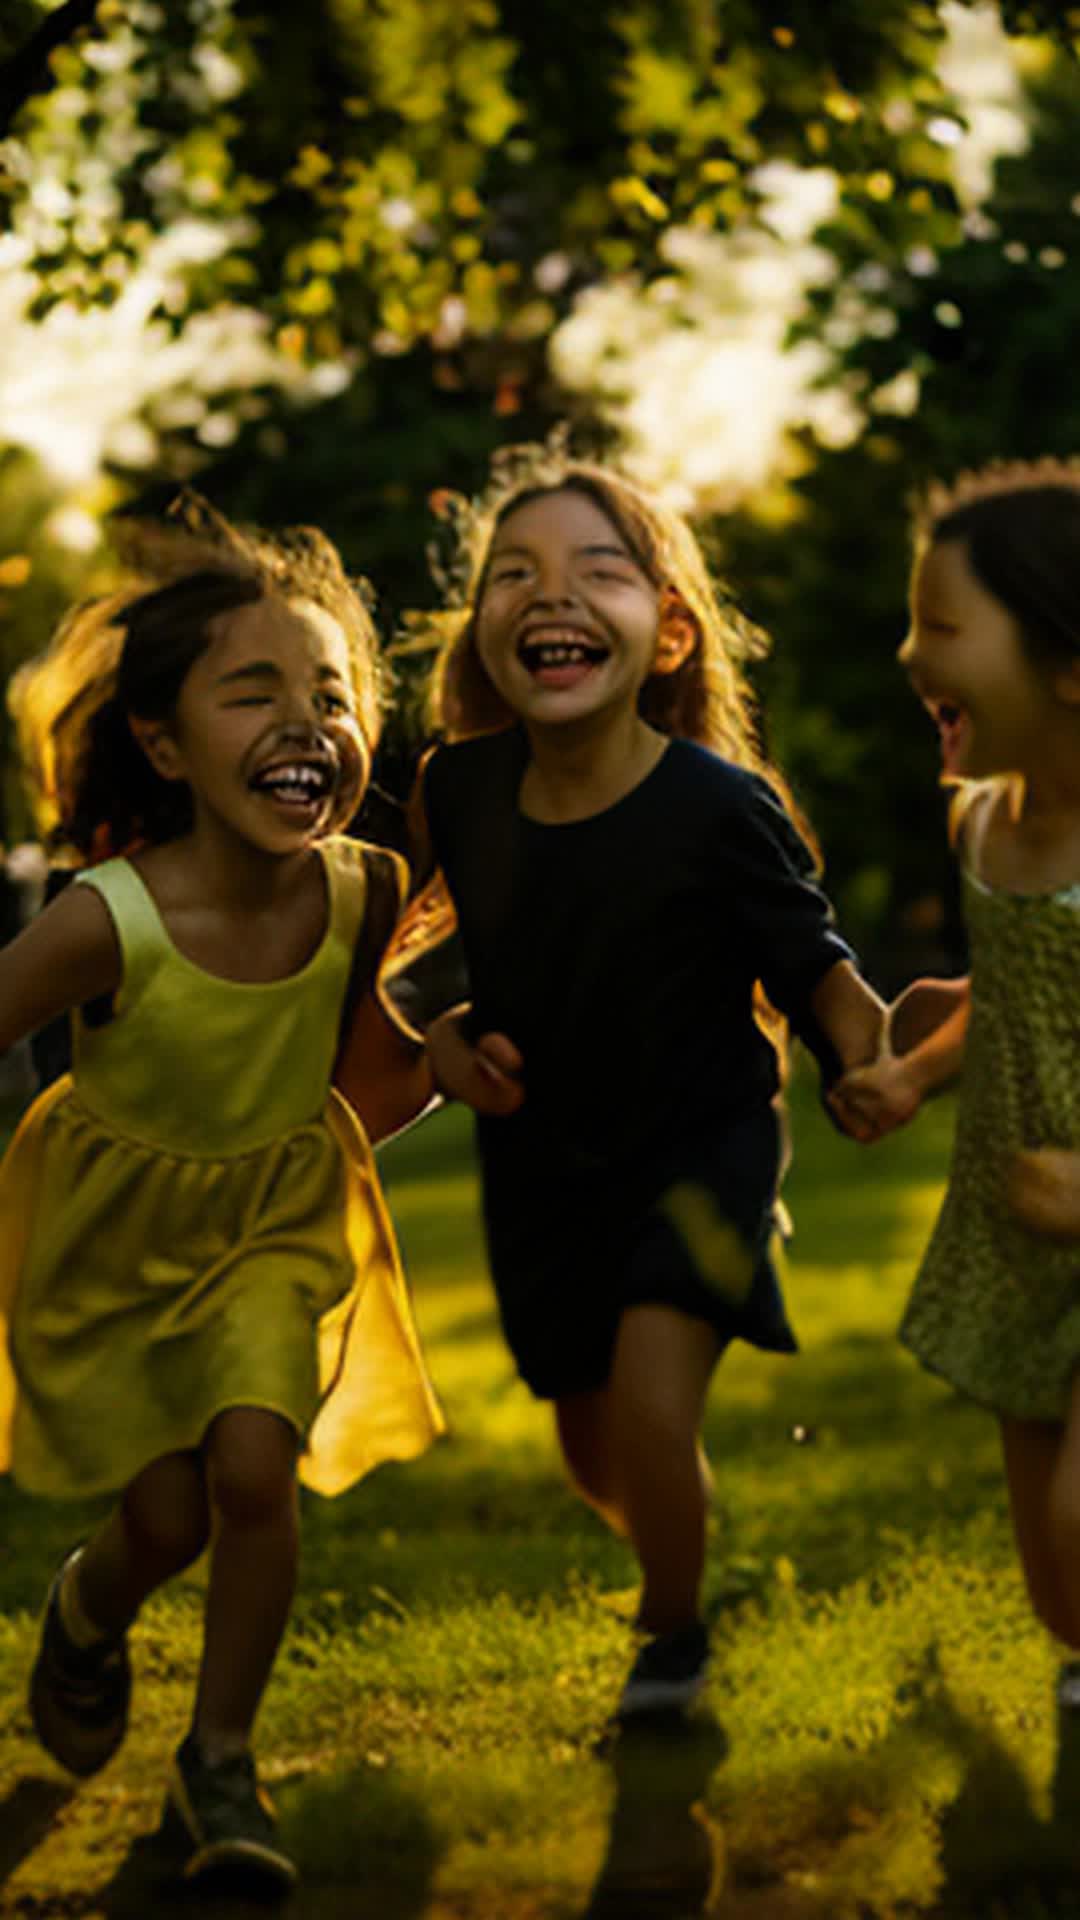 Children playing in park at sunset, vibrant photos, laughing friends, fluttering butterflies, golden sunlight, dynamic movement, capturing joyful moments